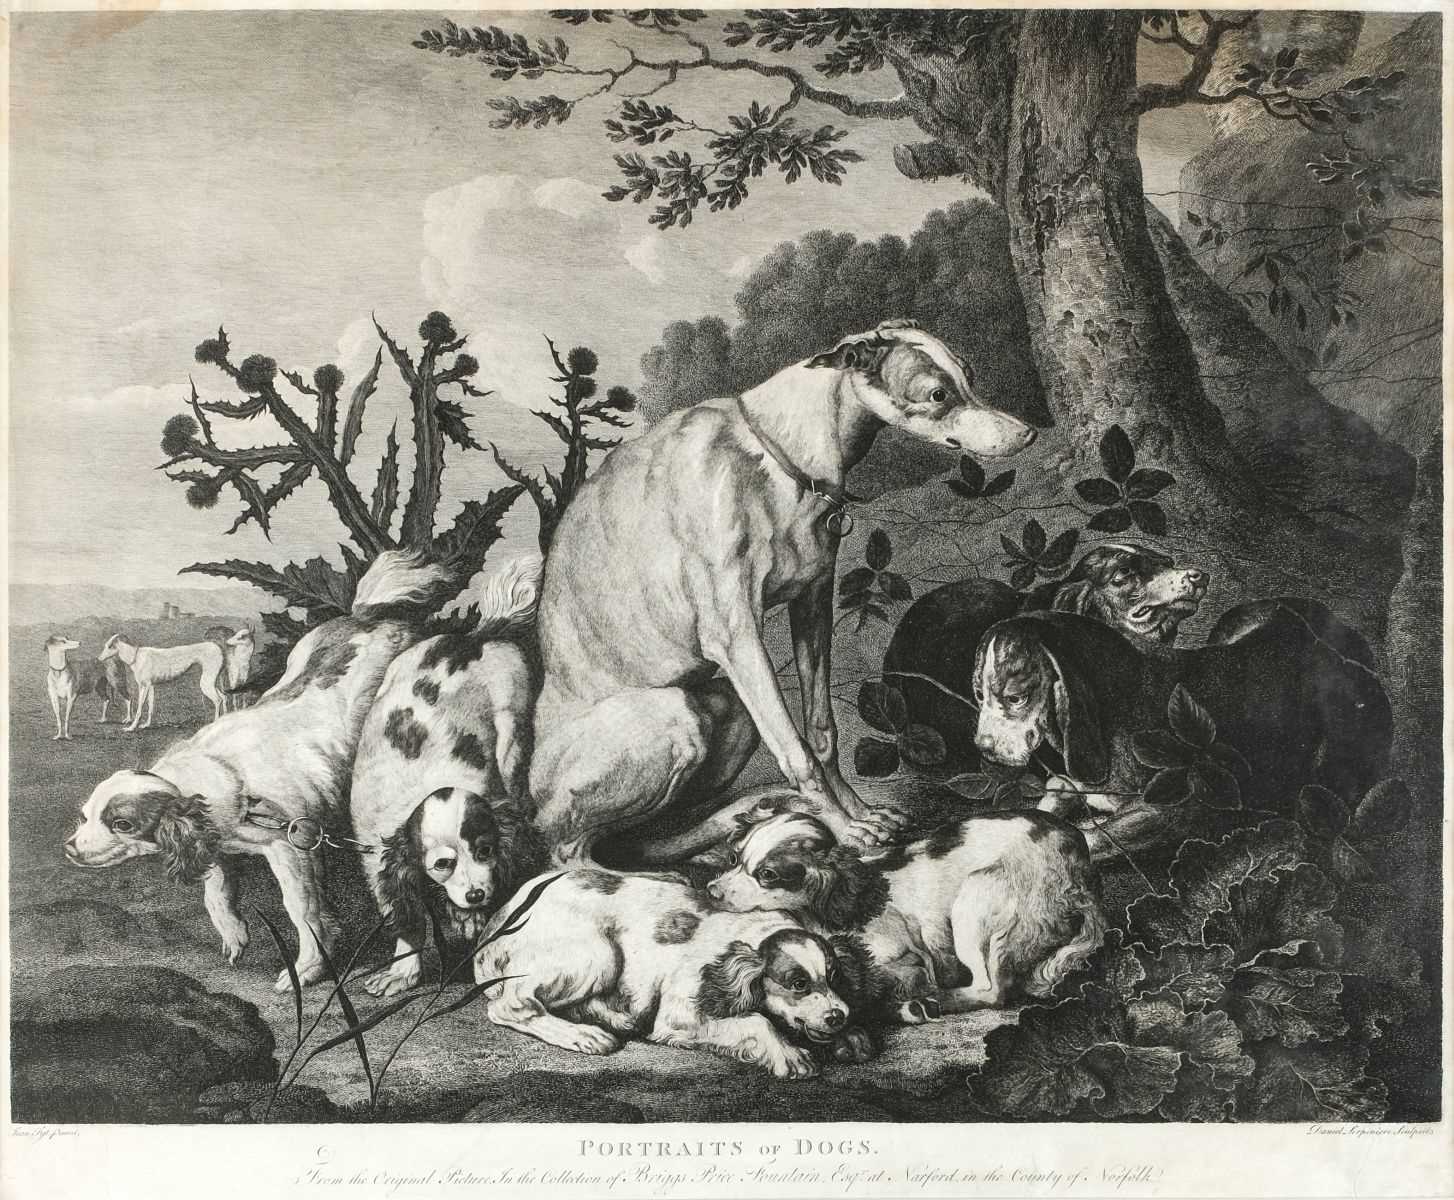 Lot 405 - Lerperniere (Daniel, 1745-1835). Portrait of Dogs, circa 1780